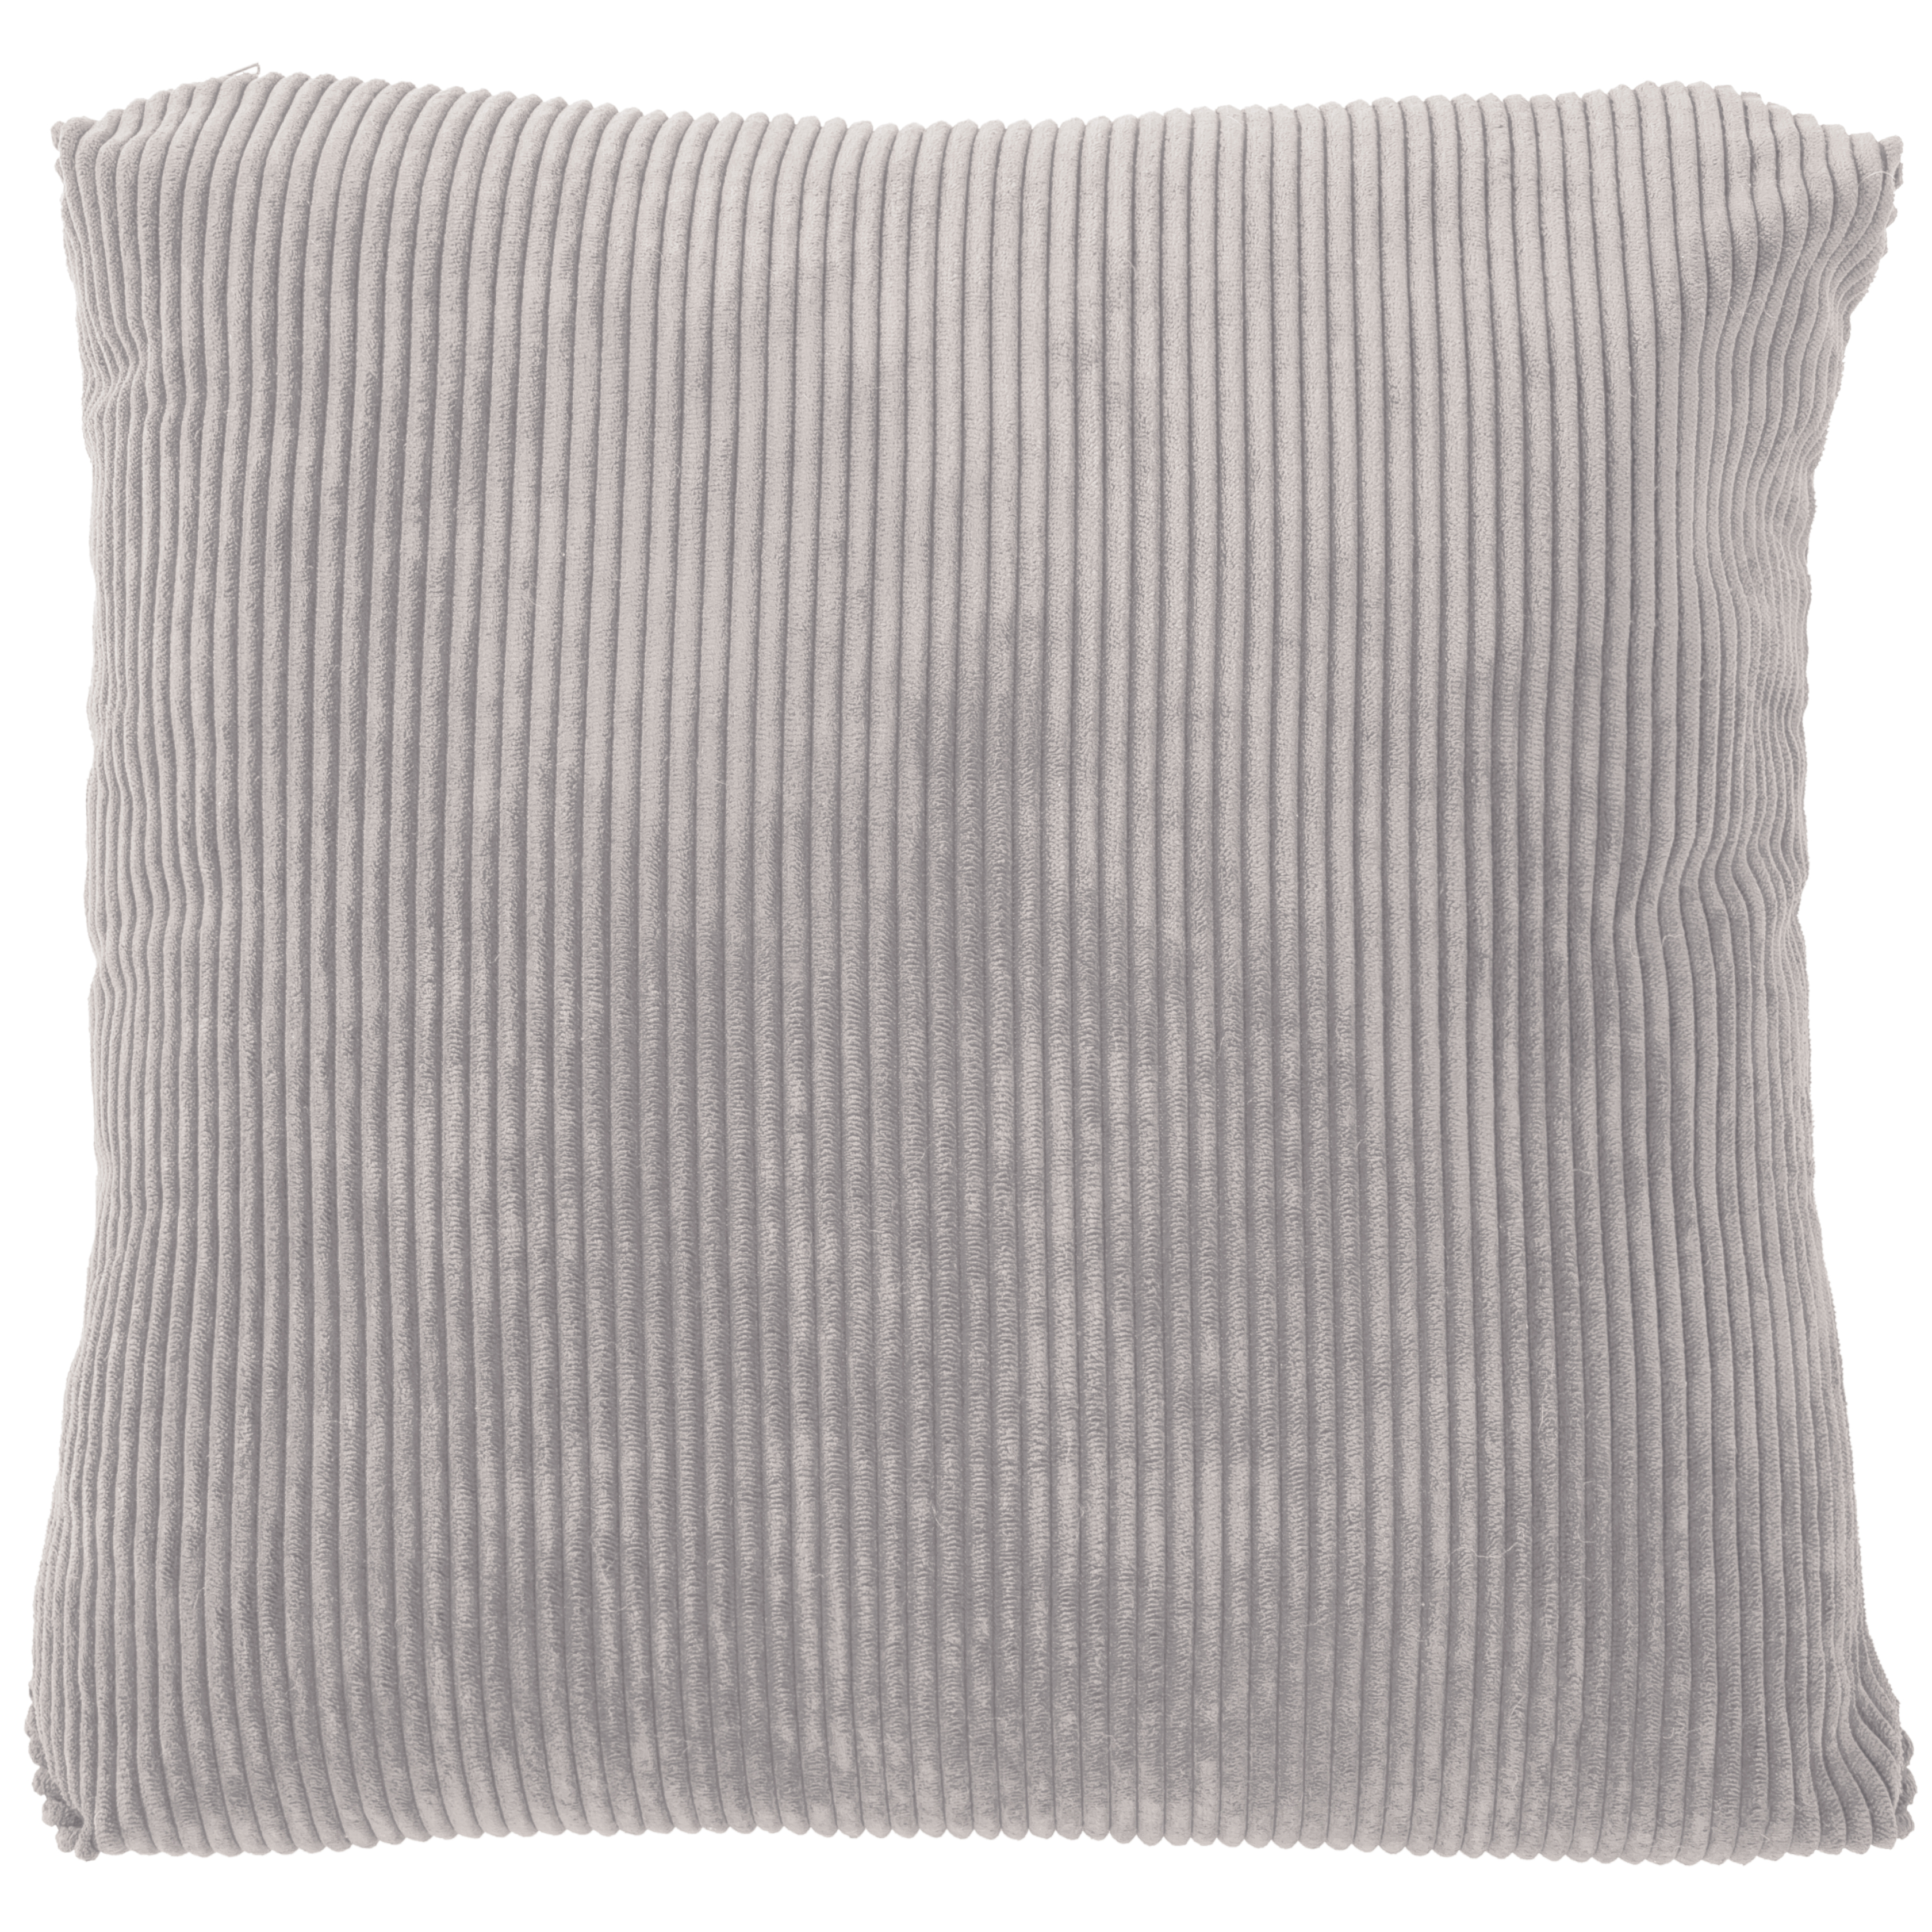 Cushion (filled) CORDOVAN - 60x60x8cm, cool grey